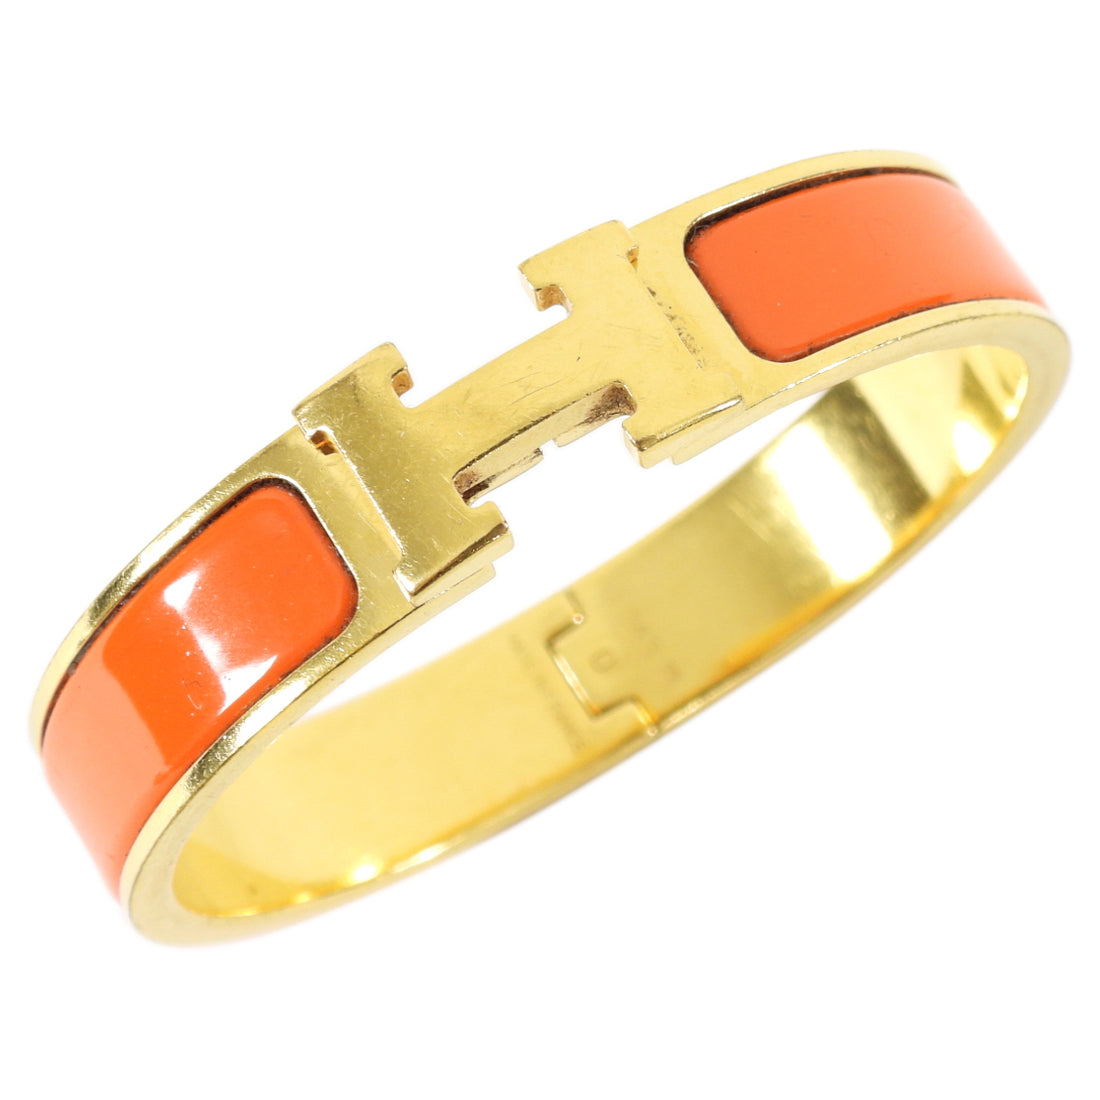 Hermes Clic H Narrow Gold and Orange Bangle Bracelet - PM